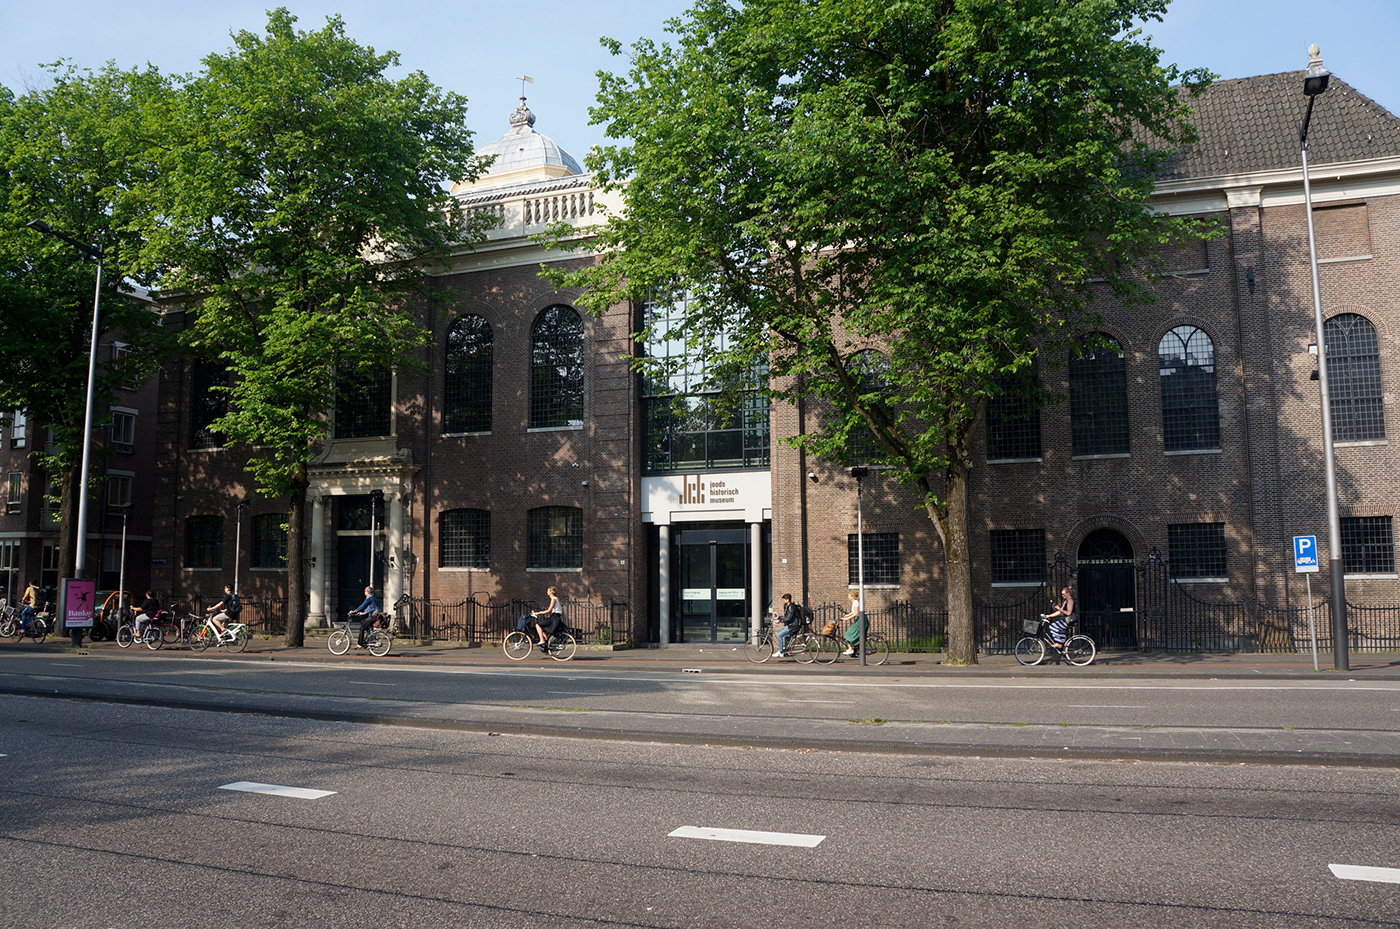 Adobe Portfolio jewish museum amsterdam Netherlands Joods Cultureel kwartier cultural quarter koeweiden postma identity